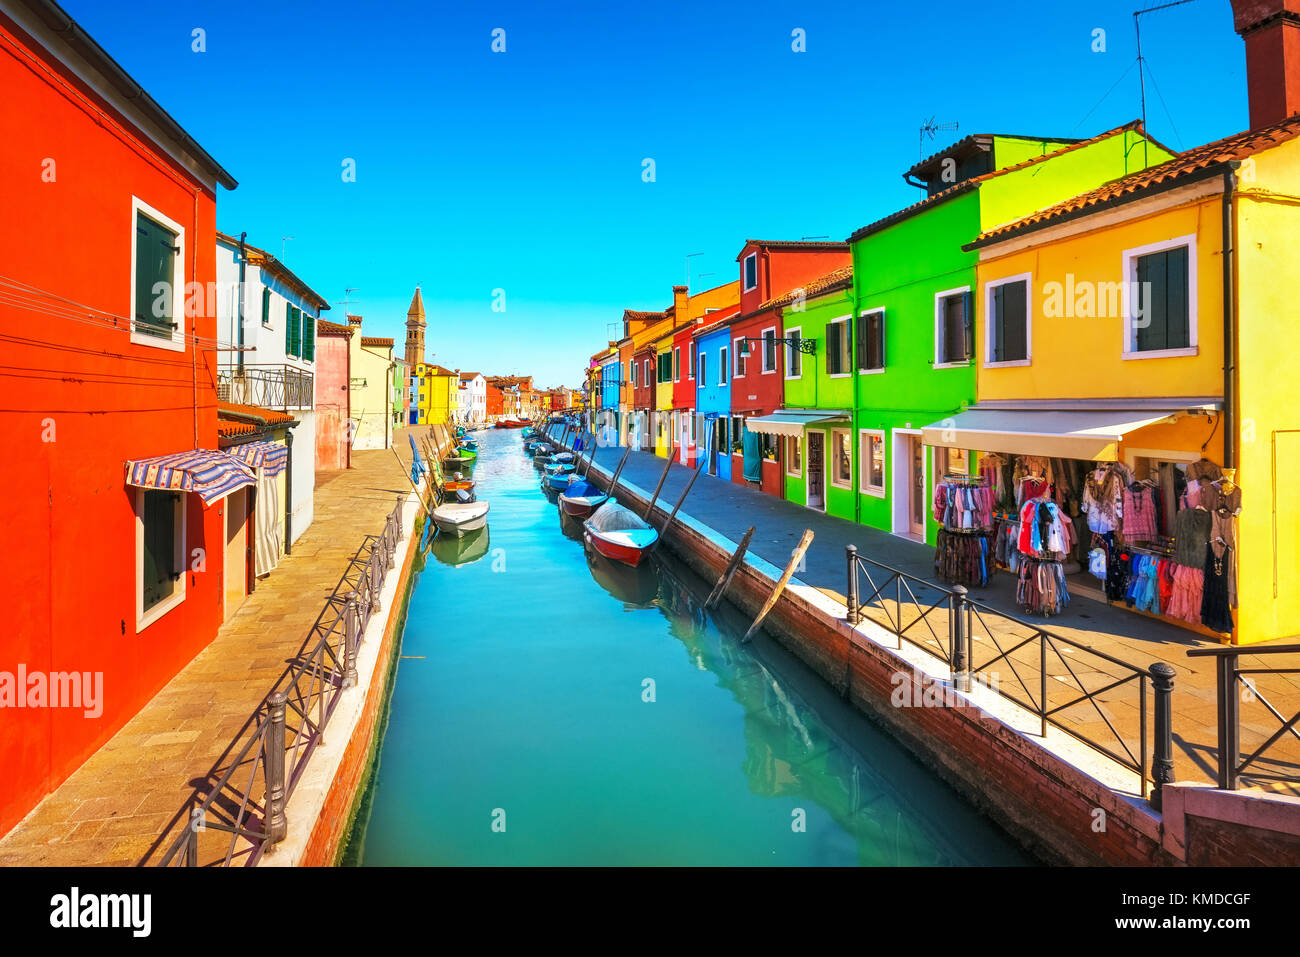 Venice landmark, Burano island canal, colorful houses and boats, Italy. Europe Stock Photo